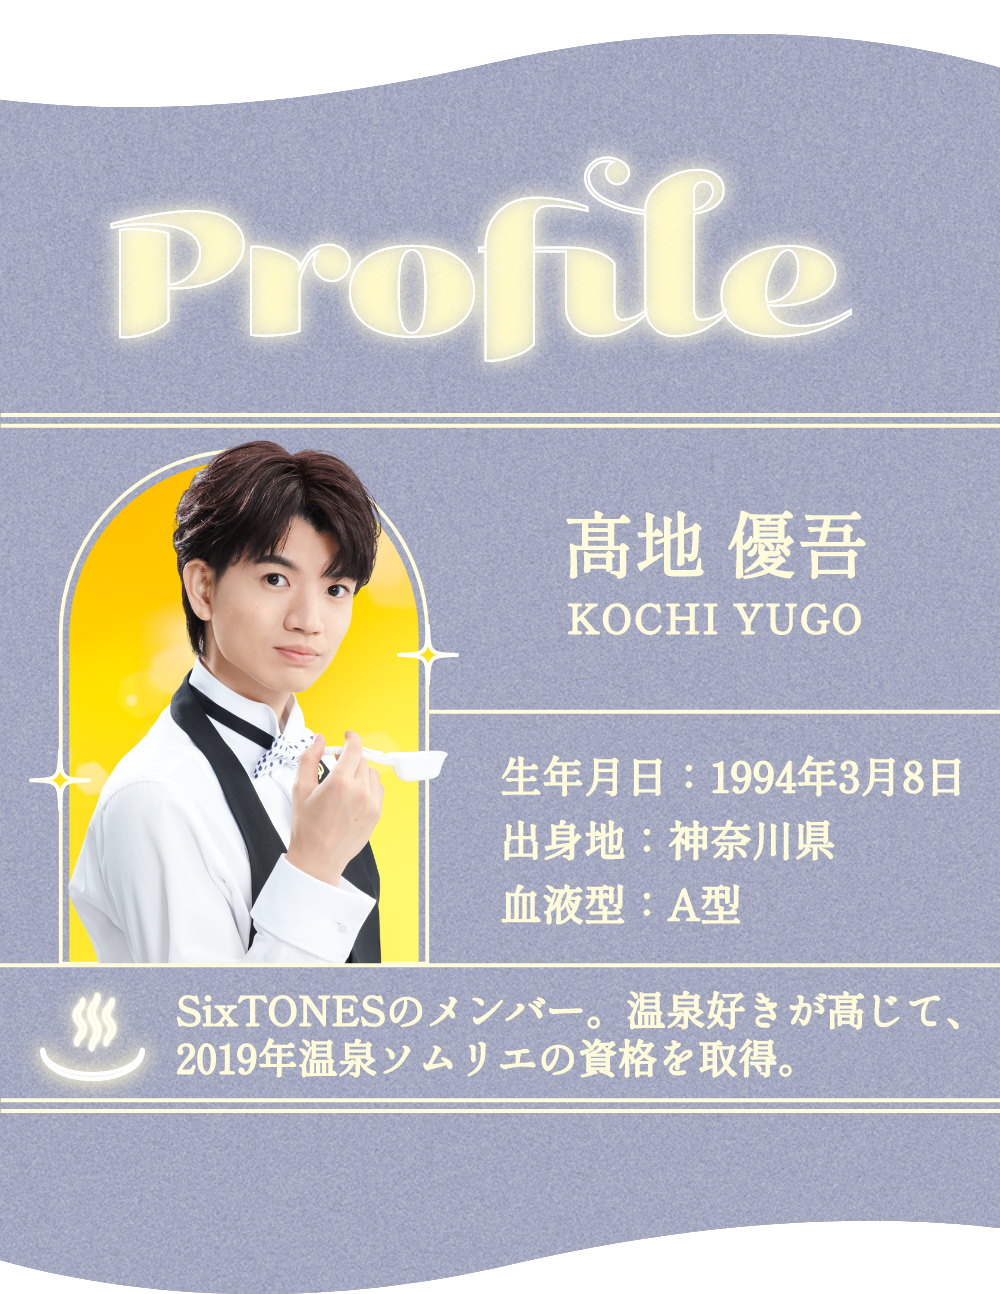 profile 高地 優吾(SixTONES) 生年月日:1994年3月8日 出身地:神奈川県 血液型:A型 温泉好きが高じて、2019年温泉ソムリエの資格を取得。